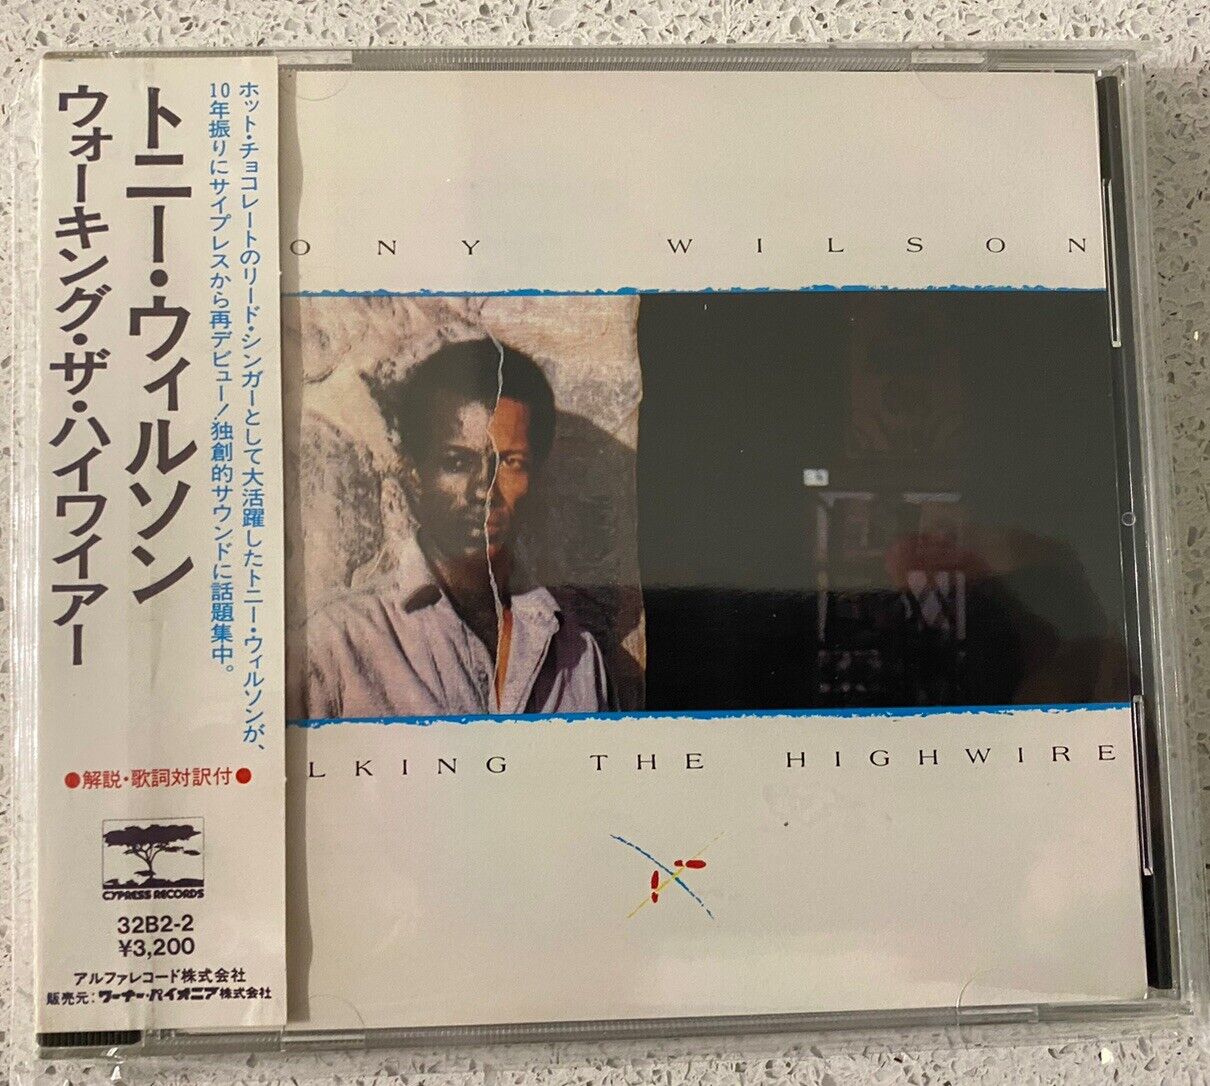 Tony Wilson (Hot Chocolate) – Walking The Highwire (CD) JAPAN OBI 32B2-2  !!!